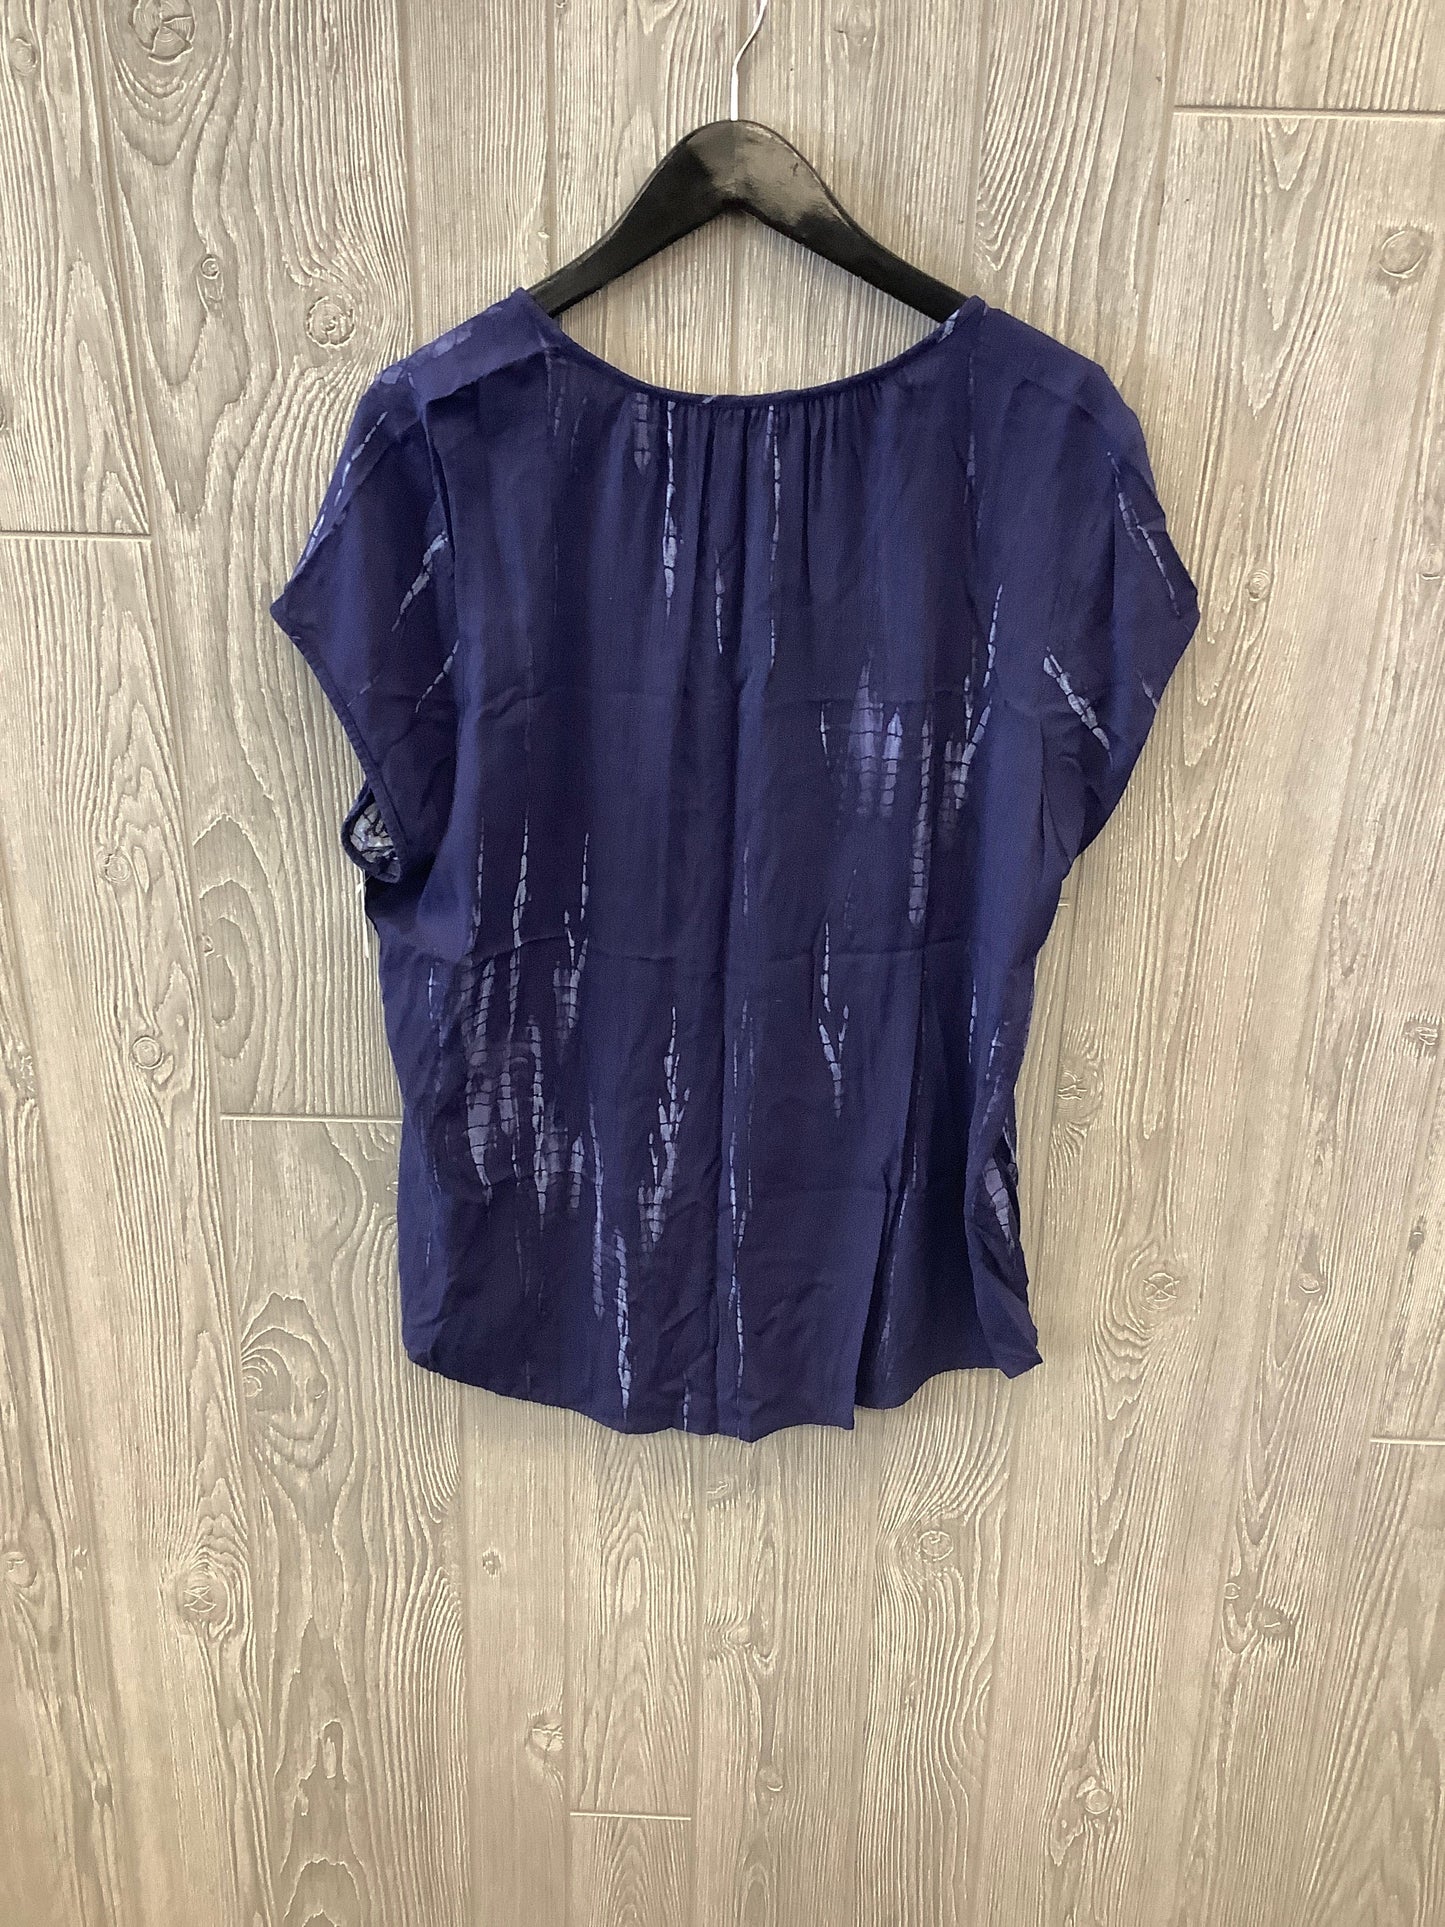 Blue Top Short Sleeve Sonoma, Size 1x